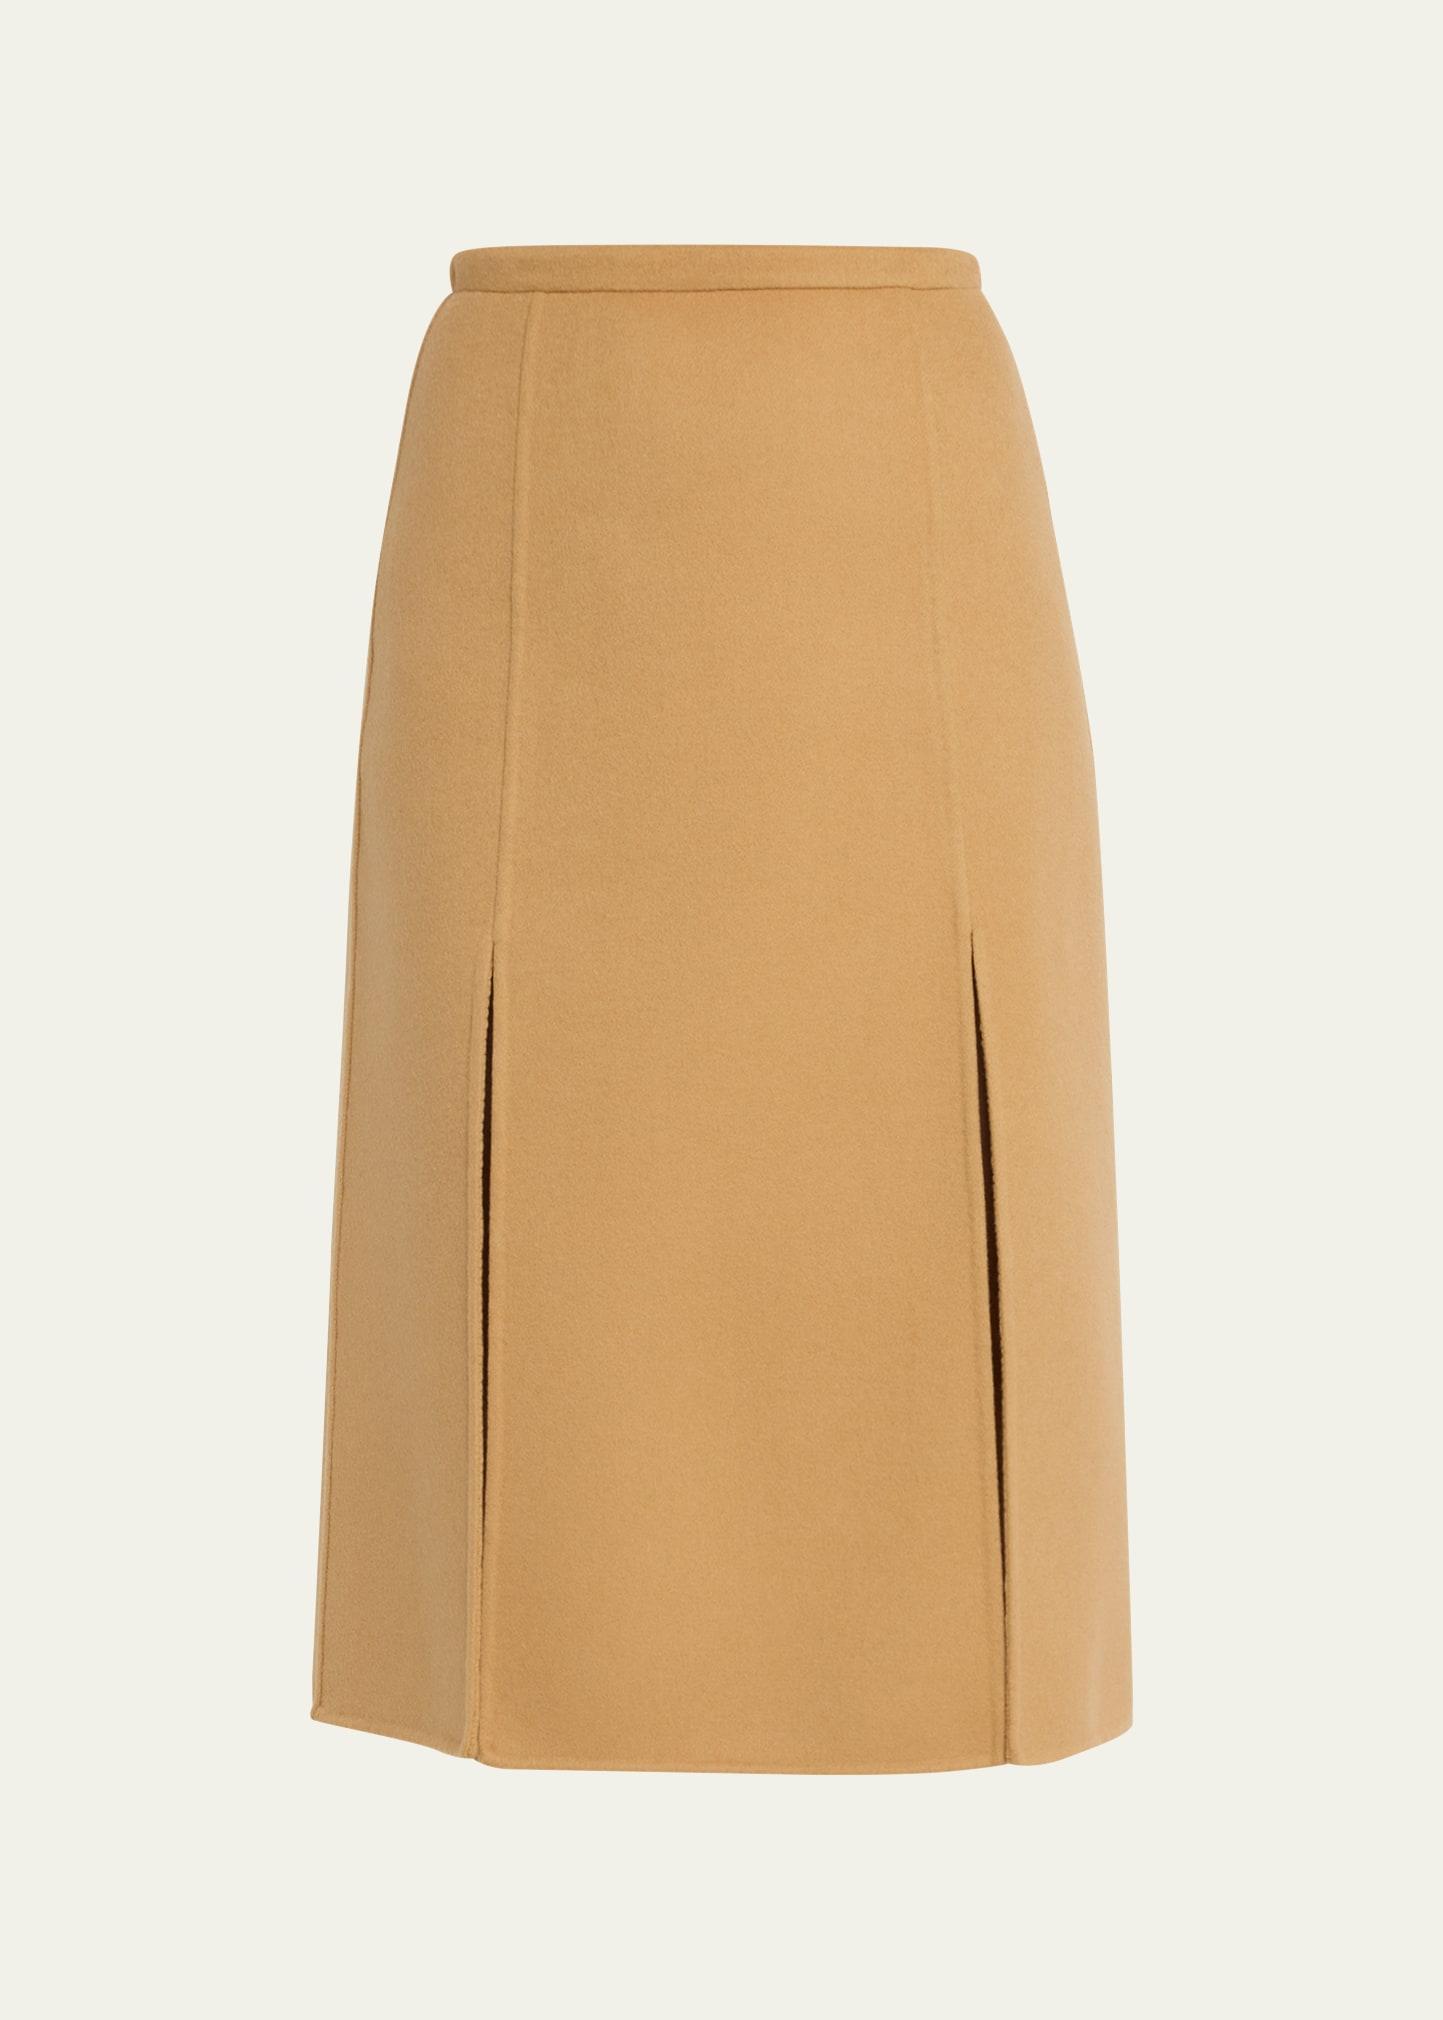 Michael Kors Collection Dual Slit Virgin Wool Skirt Product Image